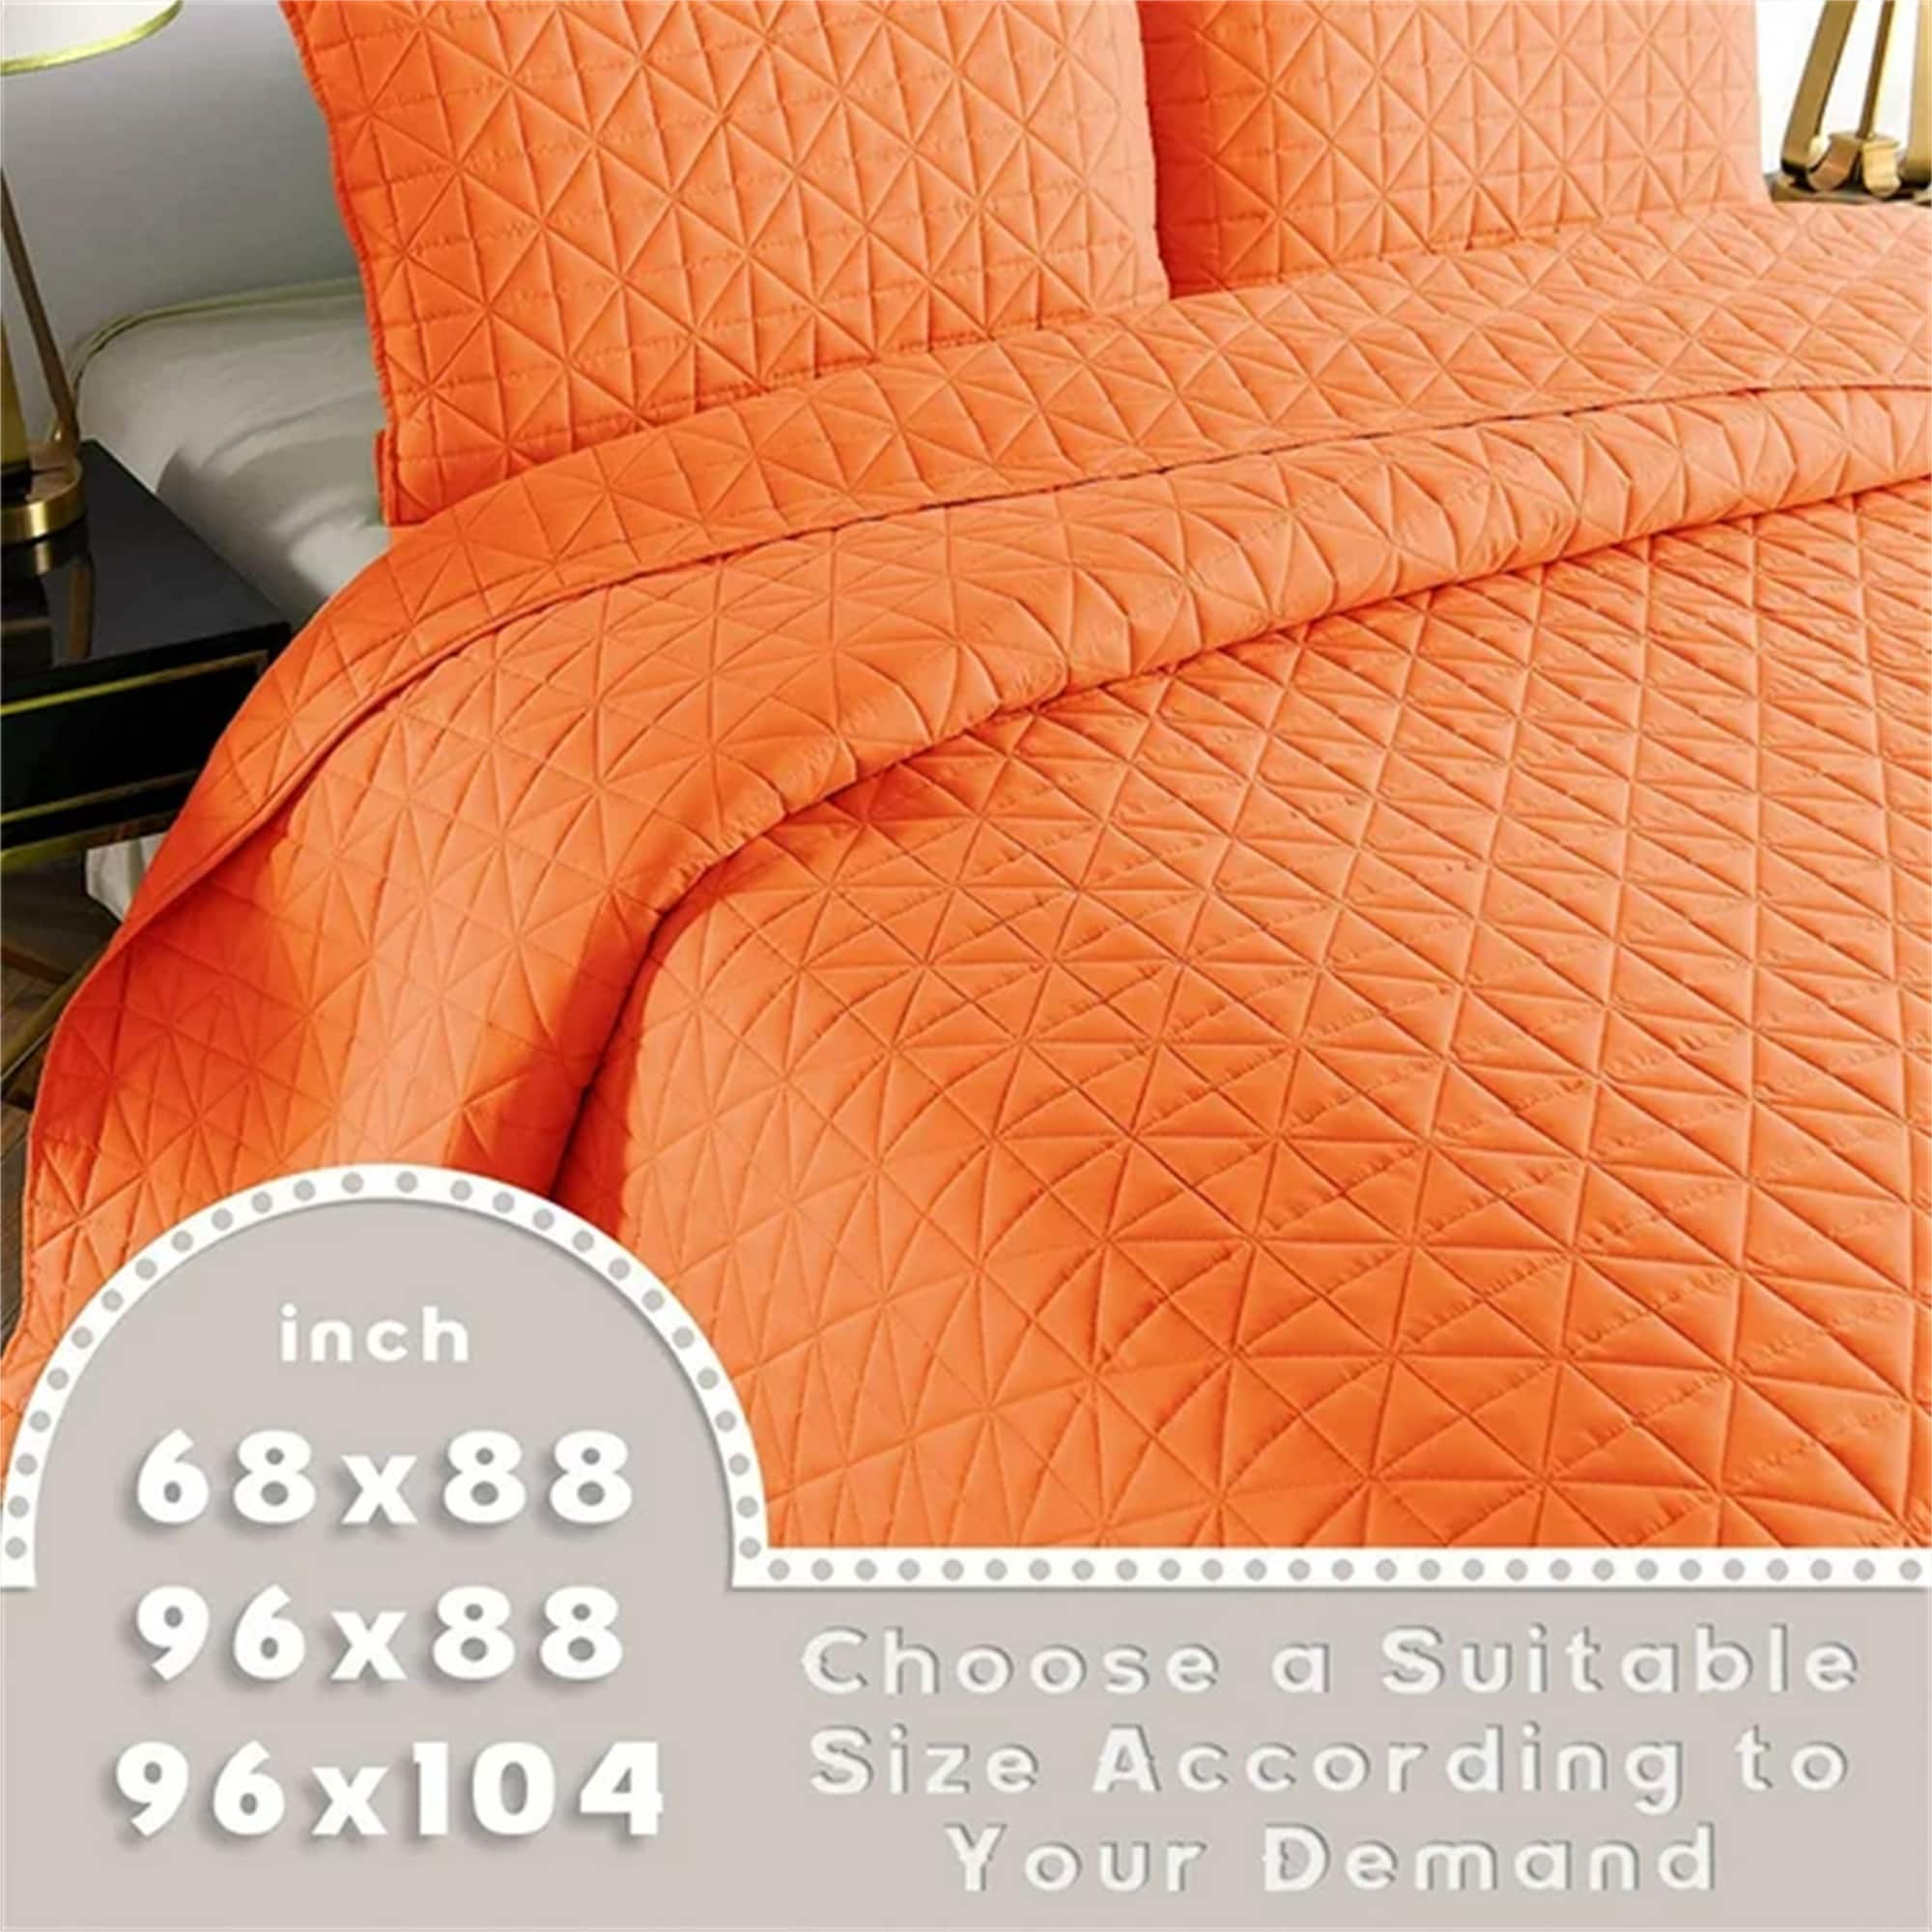 3-Piece King Size Quilt Set - On Sale - Bed Bath & Beyond - 38167702